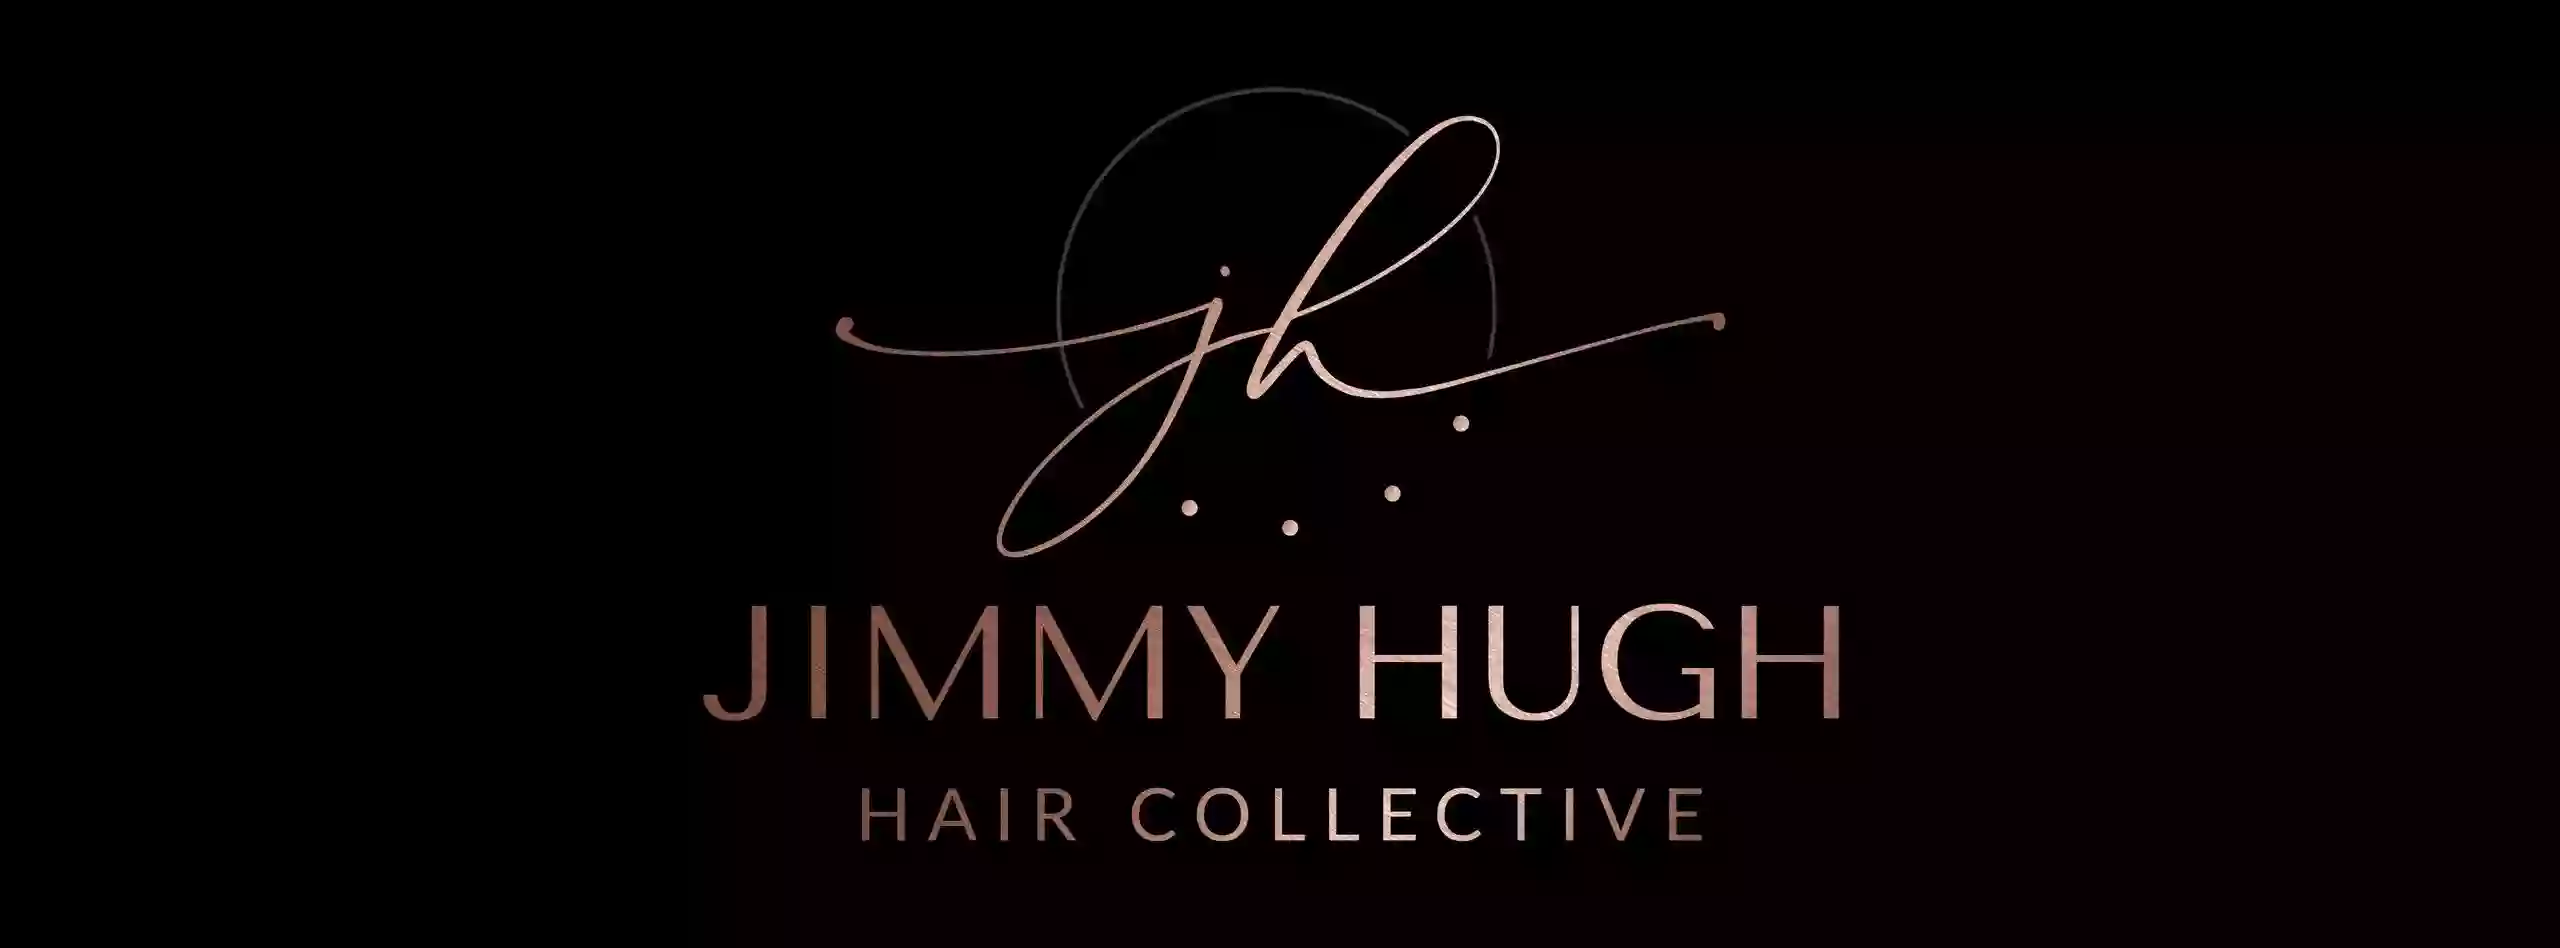 Jimmy Hugh Hair Collective